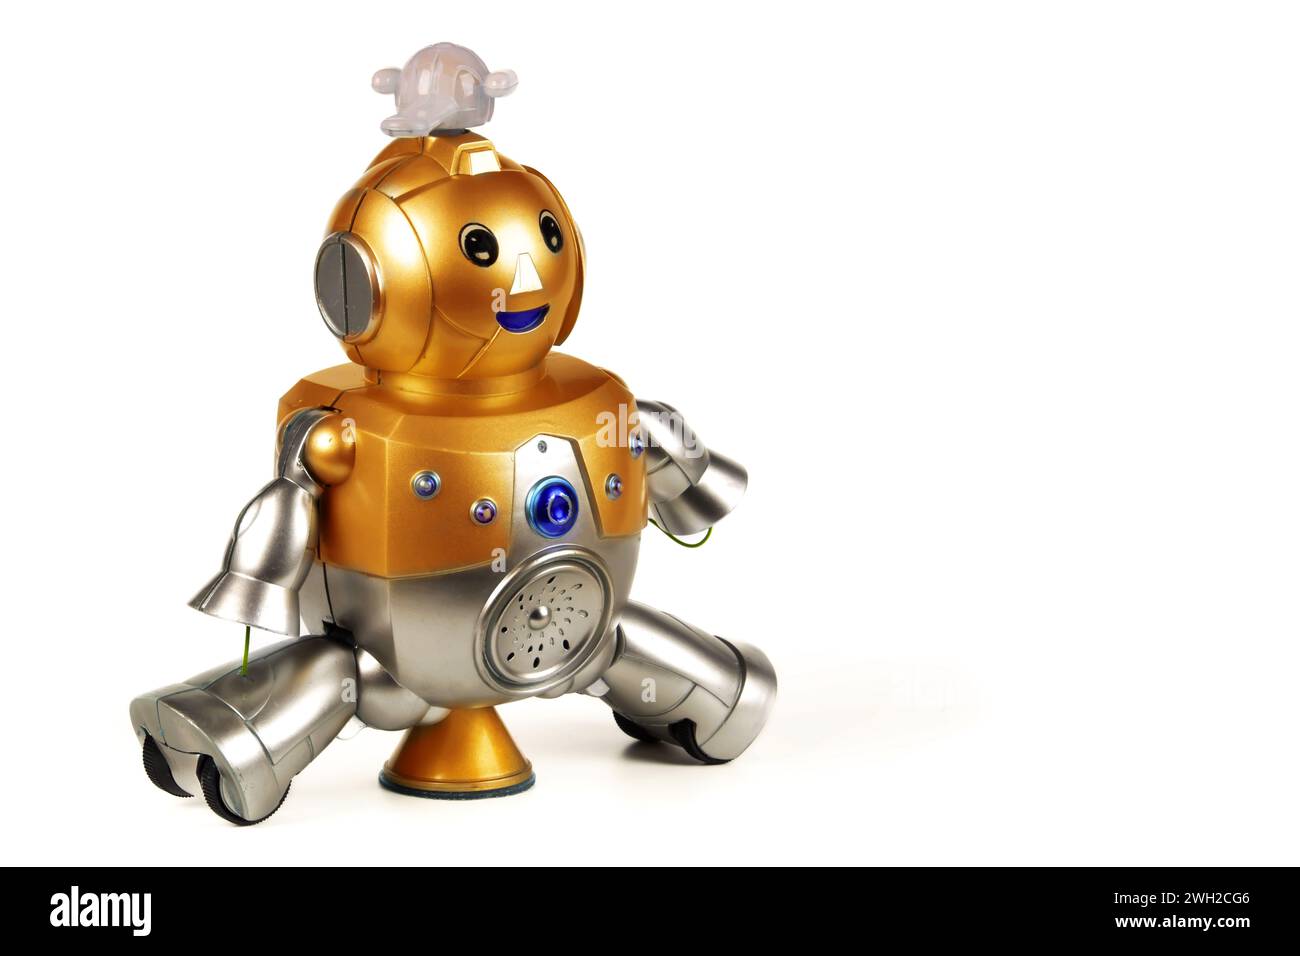 Golden toy robot isolated on white background. Dear vintage robot. Robotics. Stock Photo